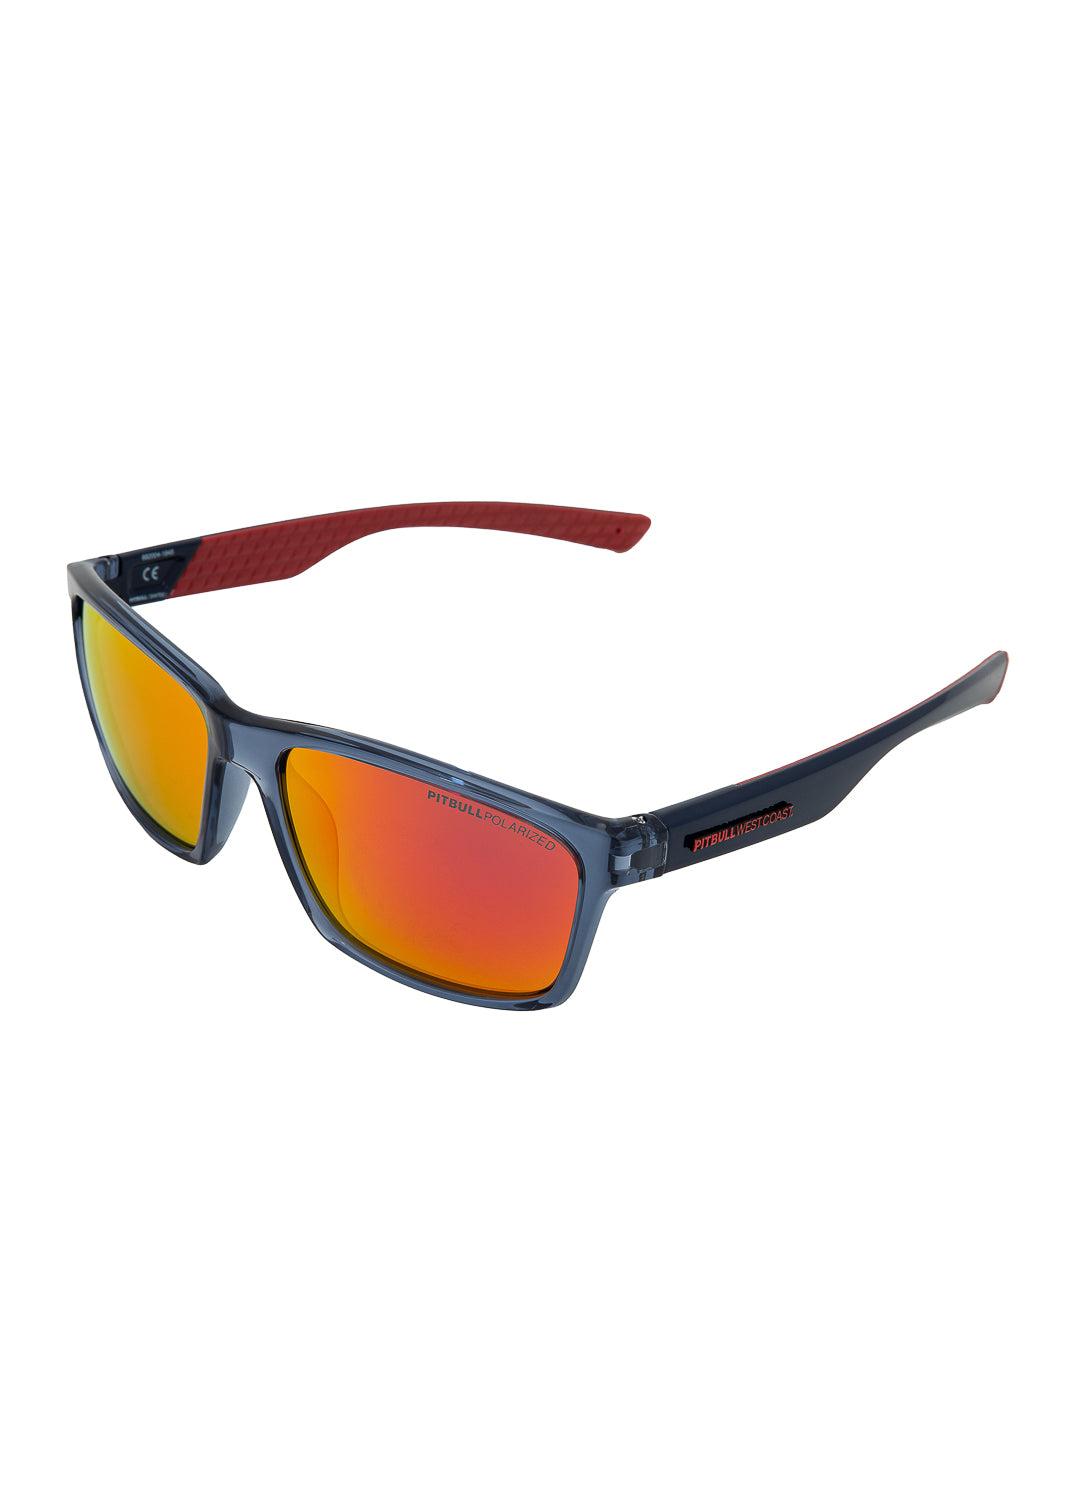 Sunglasses SANTEE Grey/Red - Pitbull West Coast International Store 